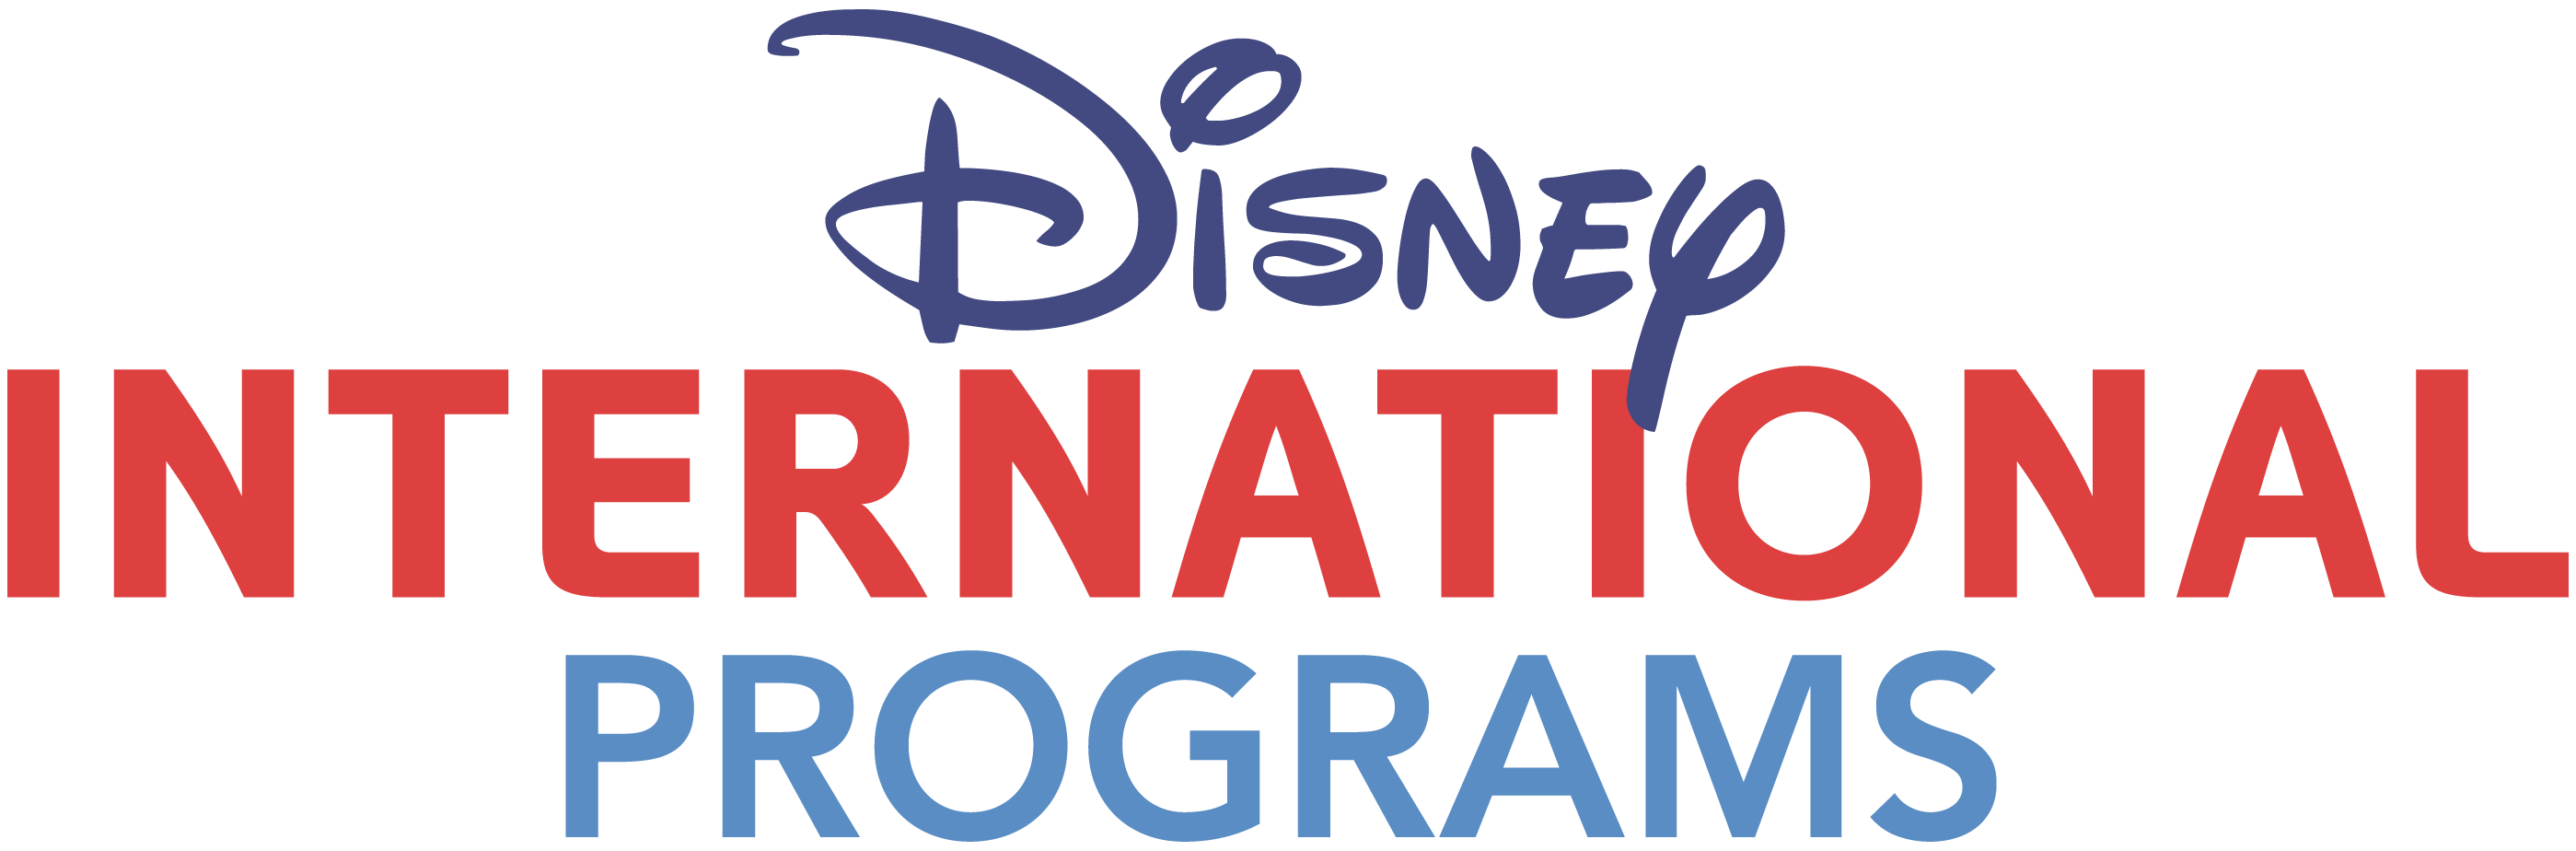 Disney International Programs